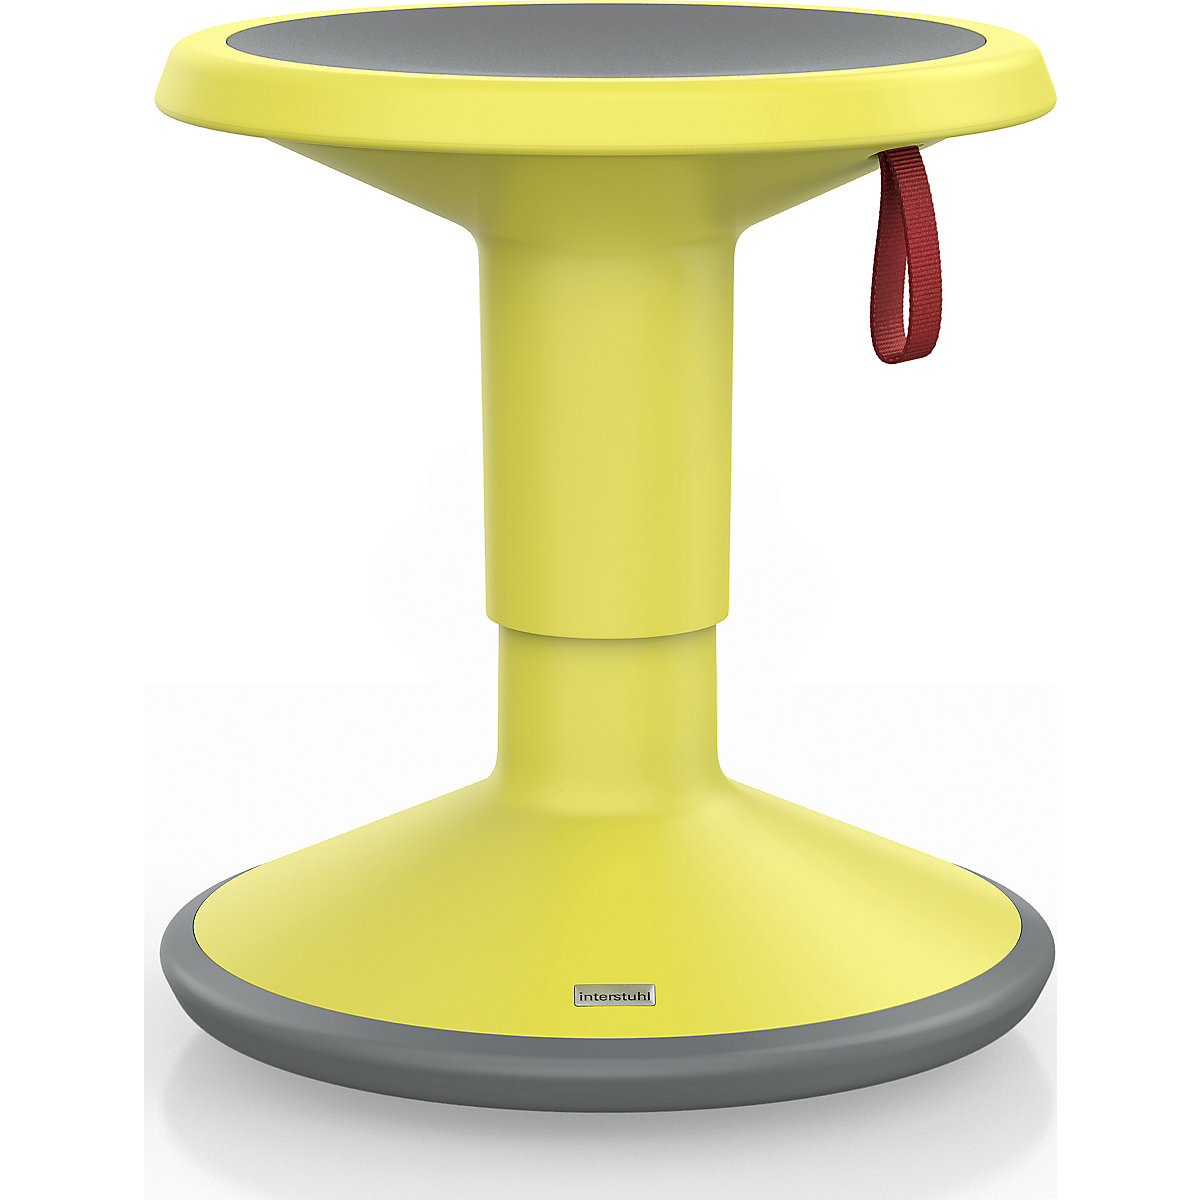 interstuhl – UP multifunctional stool, height adjustable 375 – 490 mm, lemon yellow